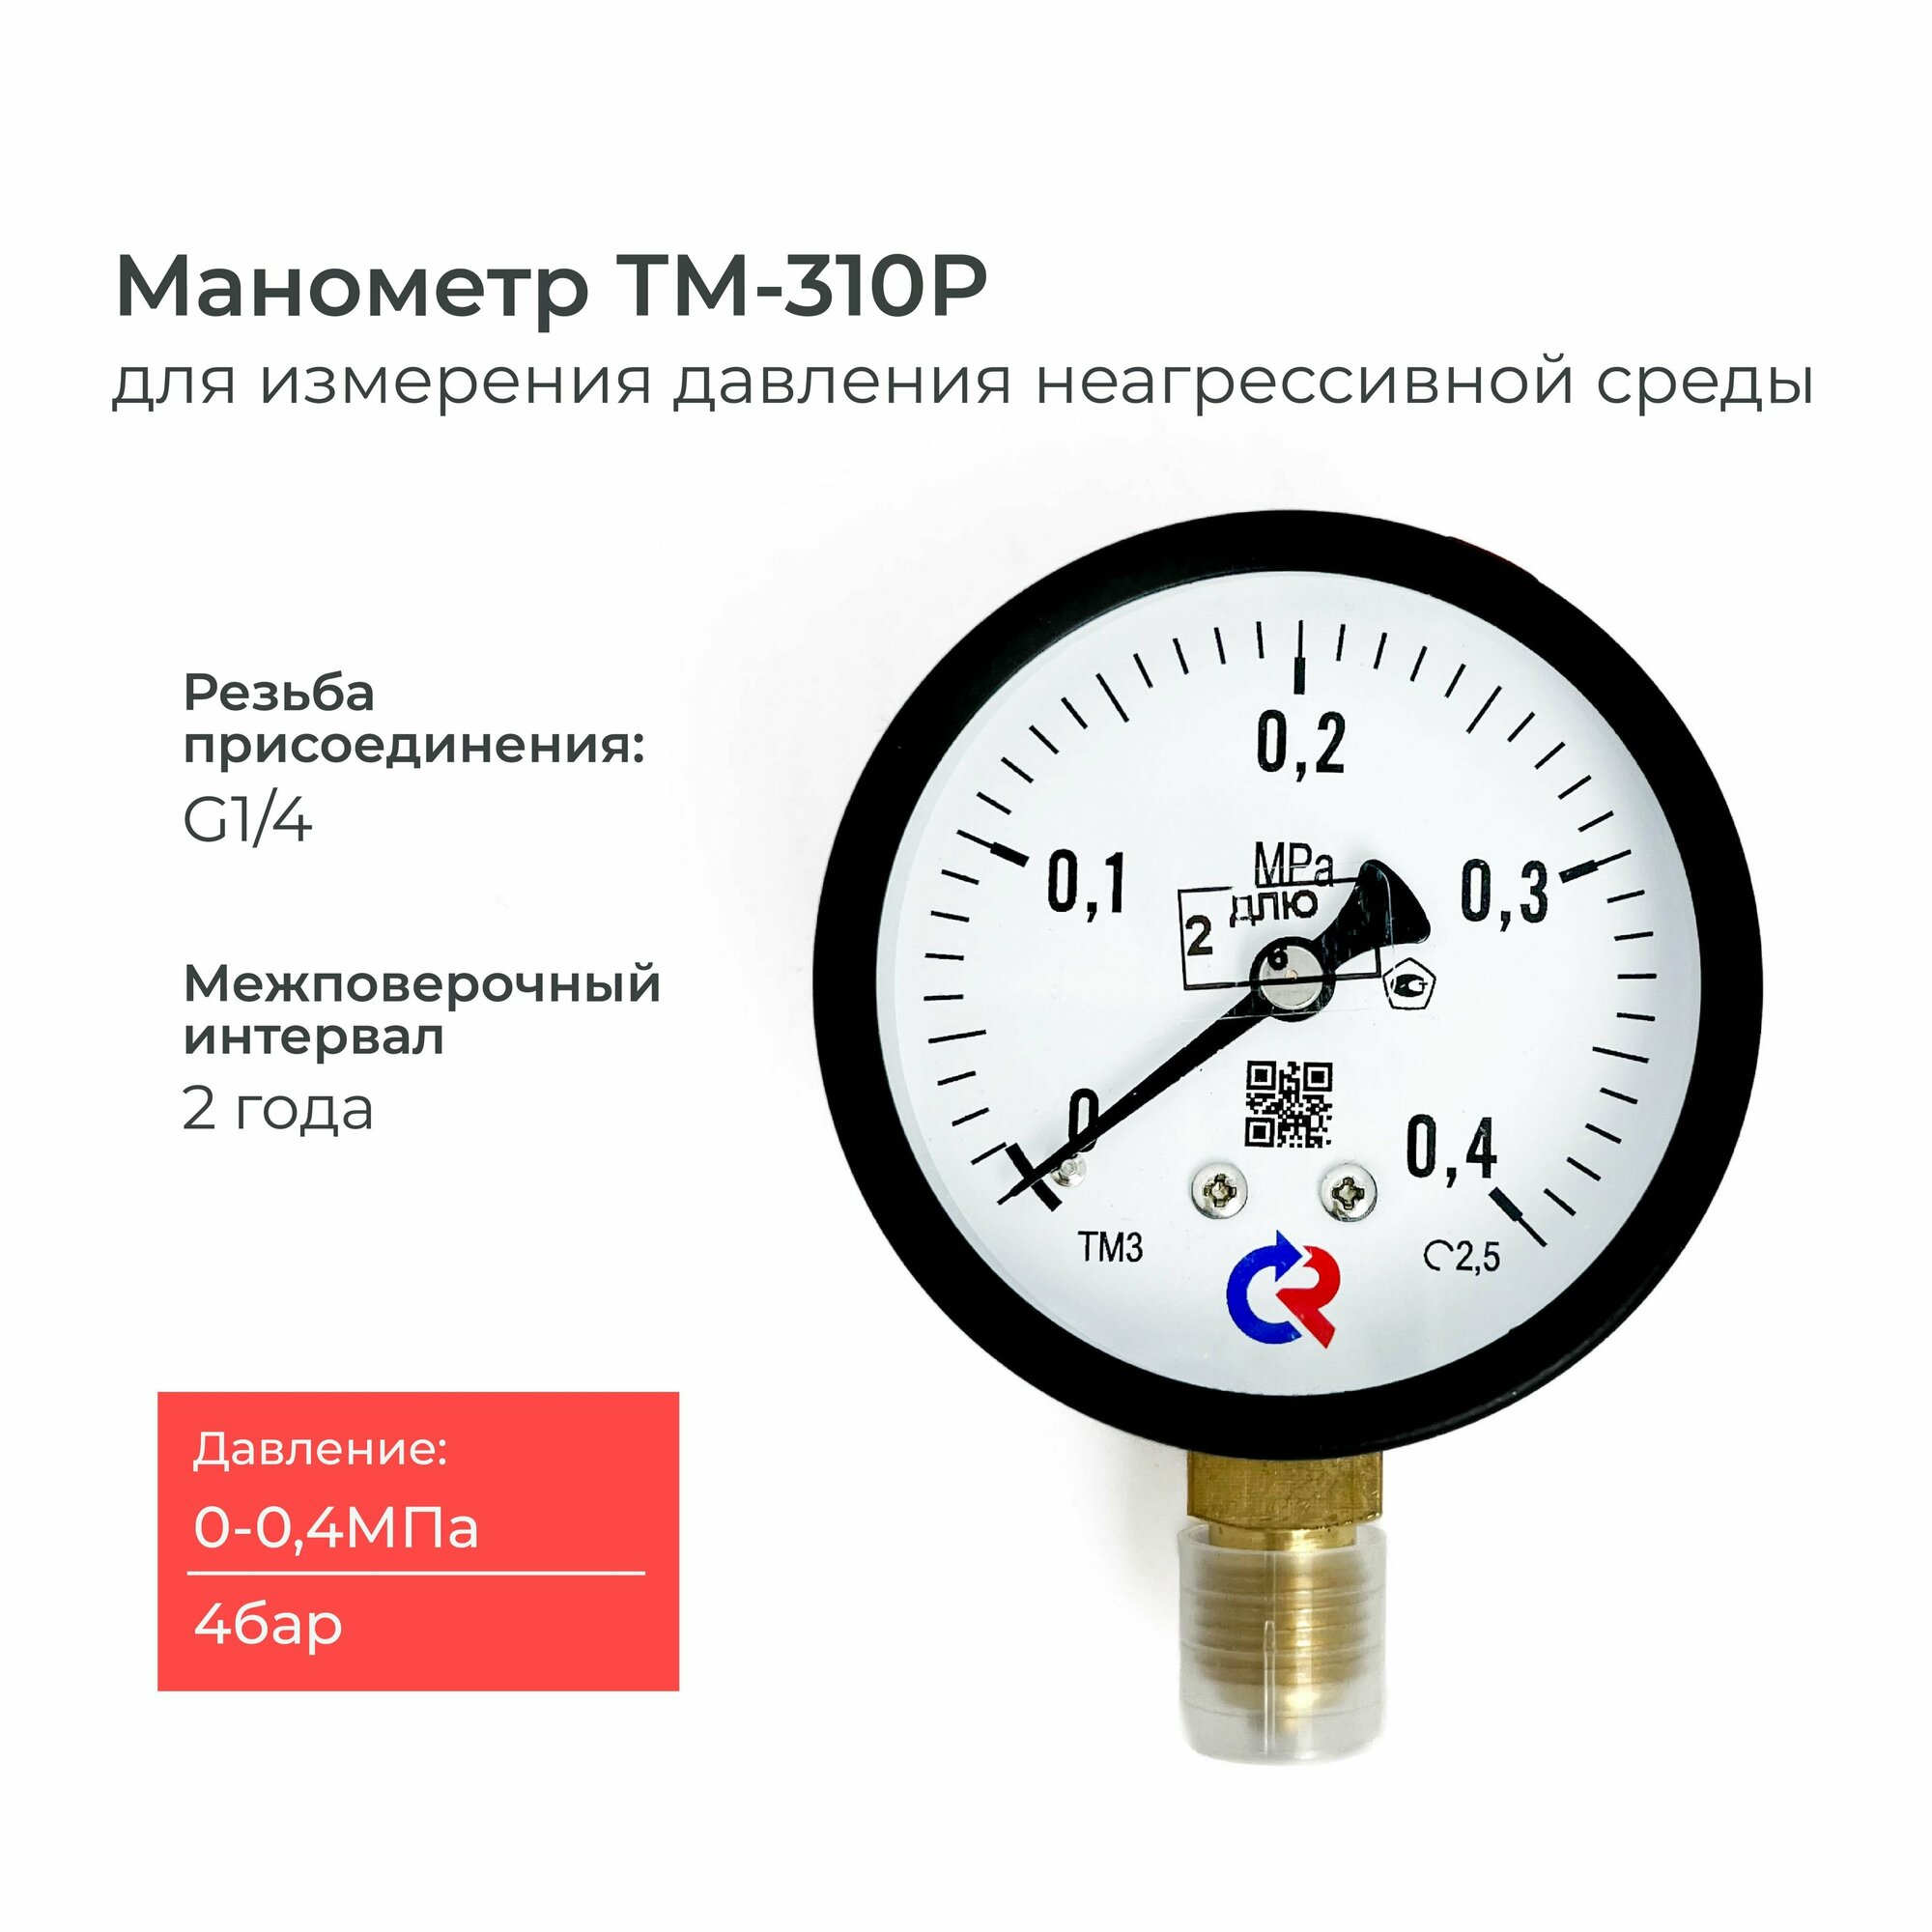 Манометр ТМ-310P давление 0-0.4 МПа (4 бар) резьба G1/4 класс точности 2,5 корпус 63 мм.